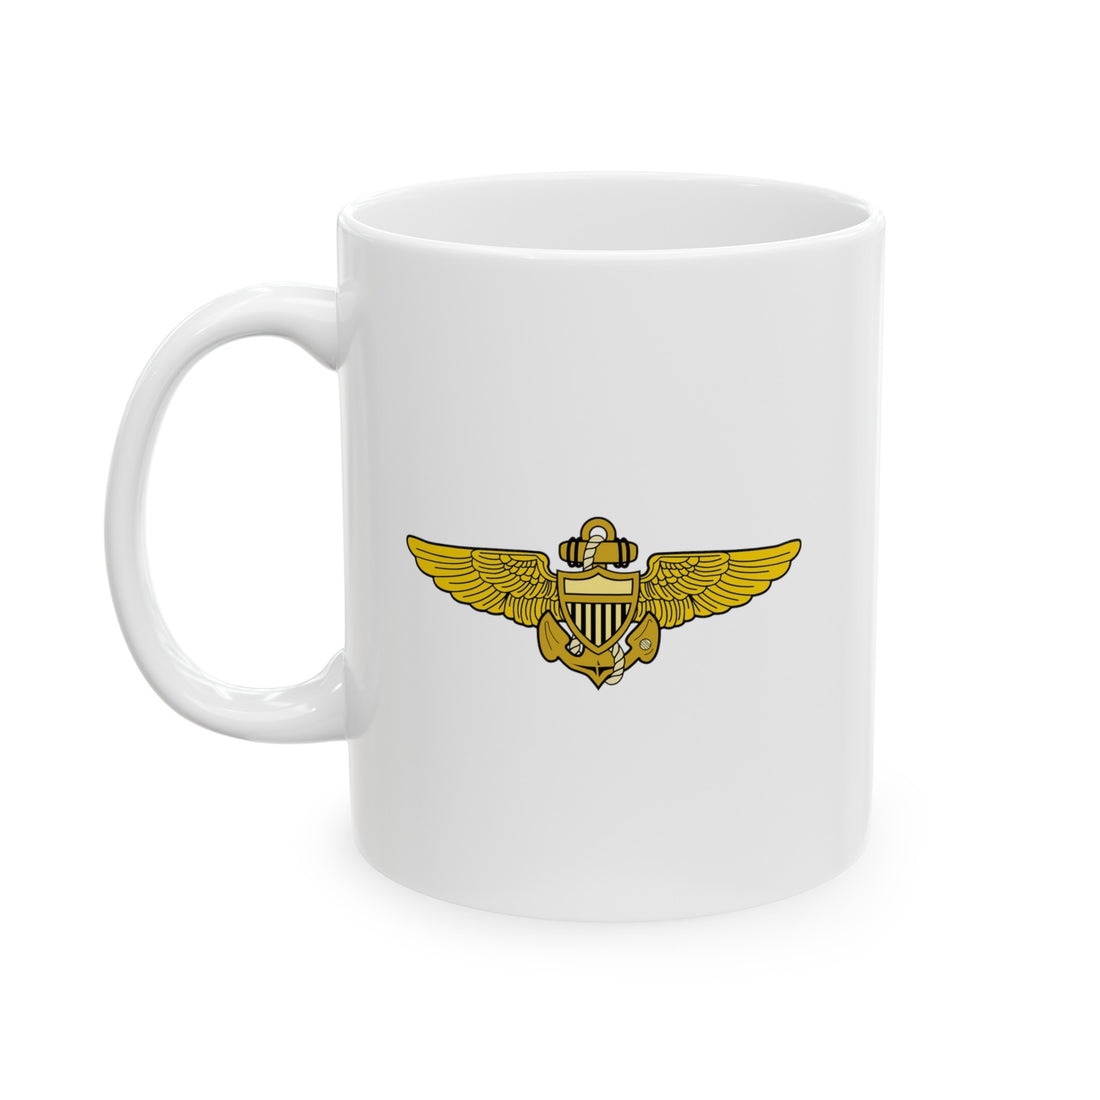 VP-47 Aviator Ceramic Mug